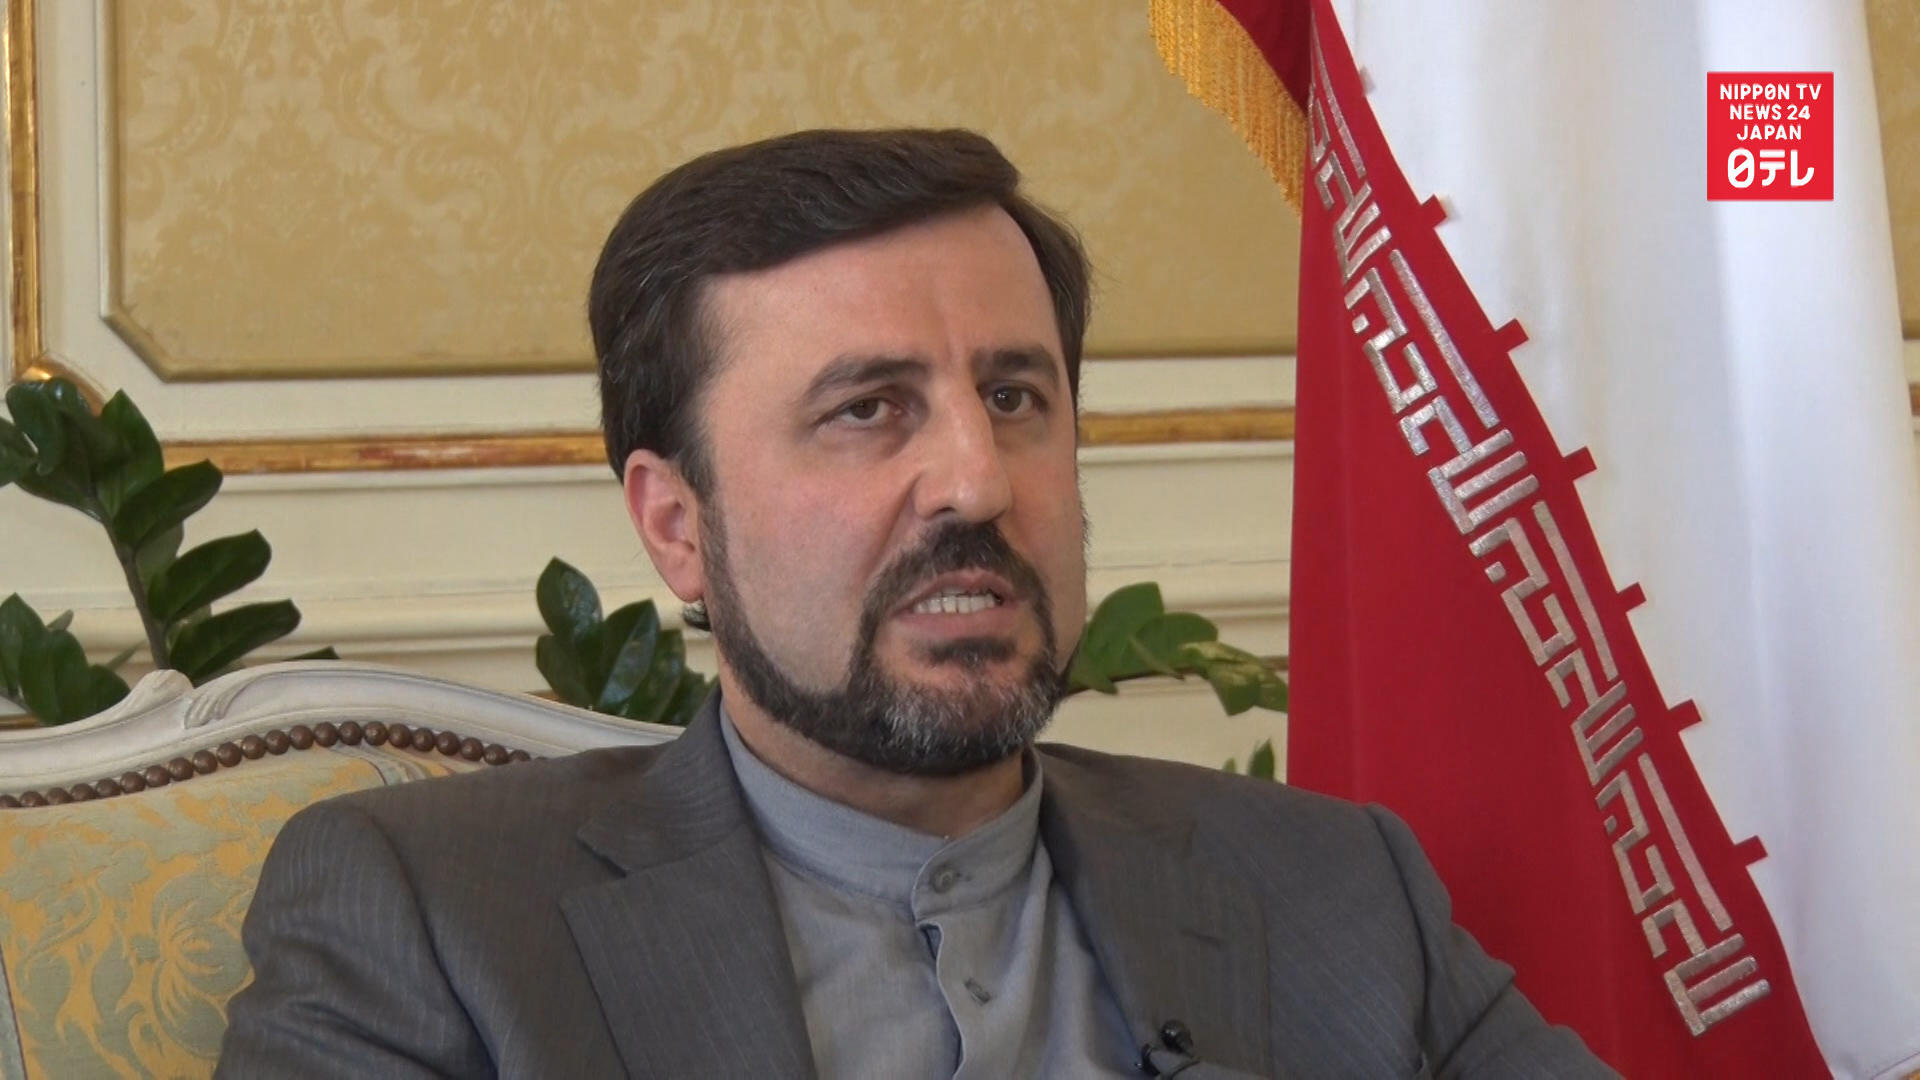 Nippon TV Exclusive: Interview with Iran's IAEA ambassador